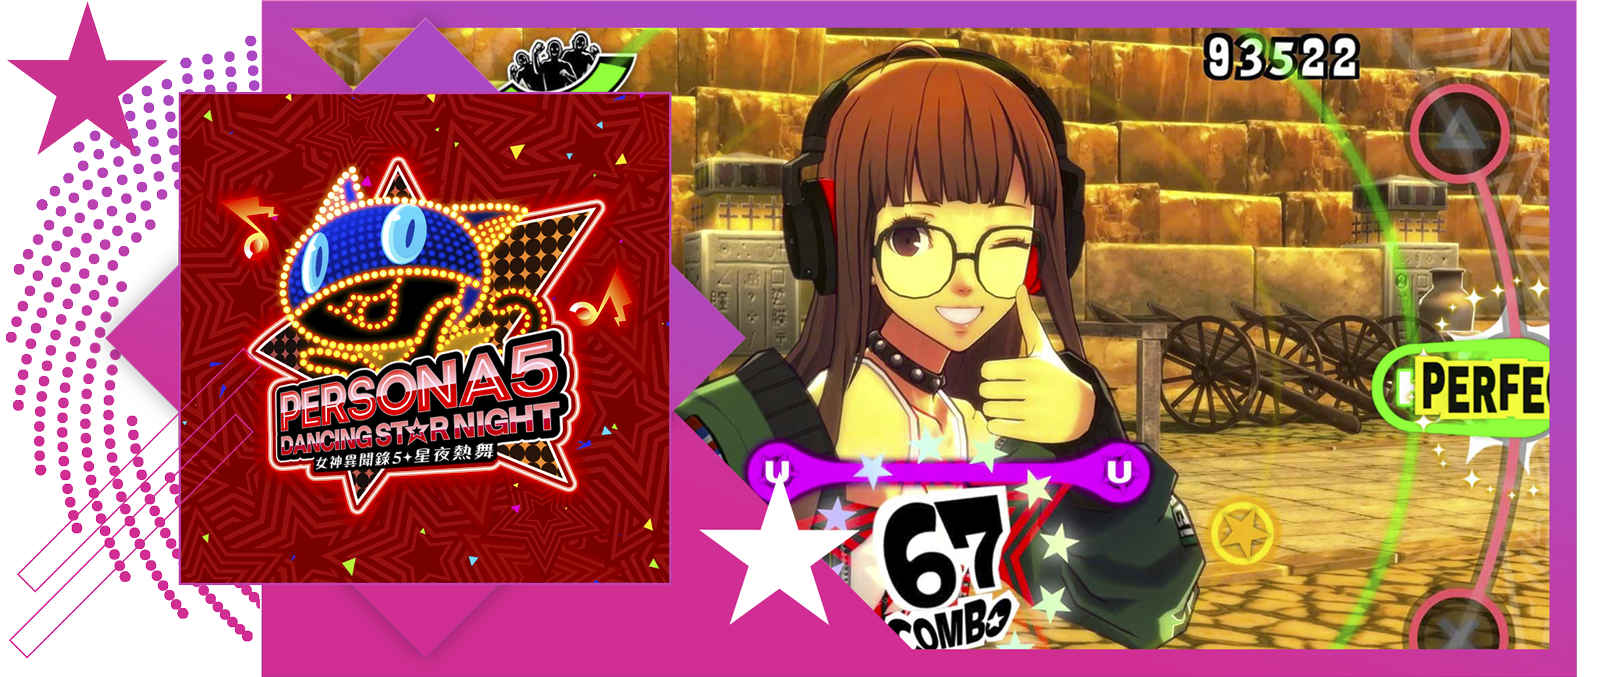 Persona5 Dancing Star Night - Key Art